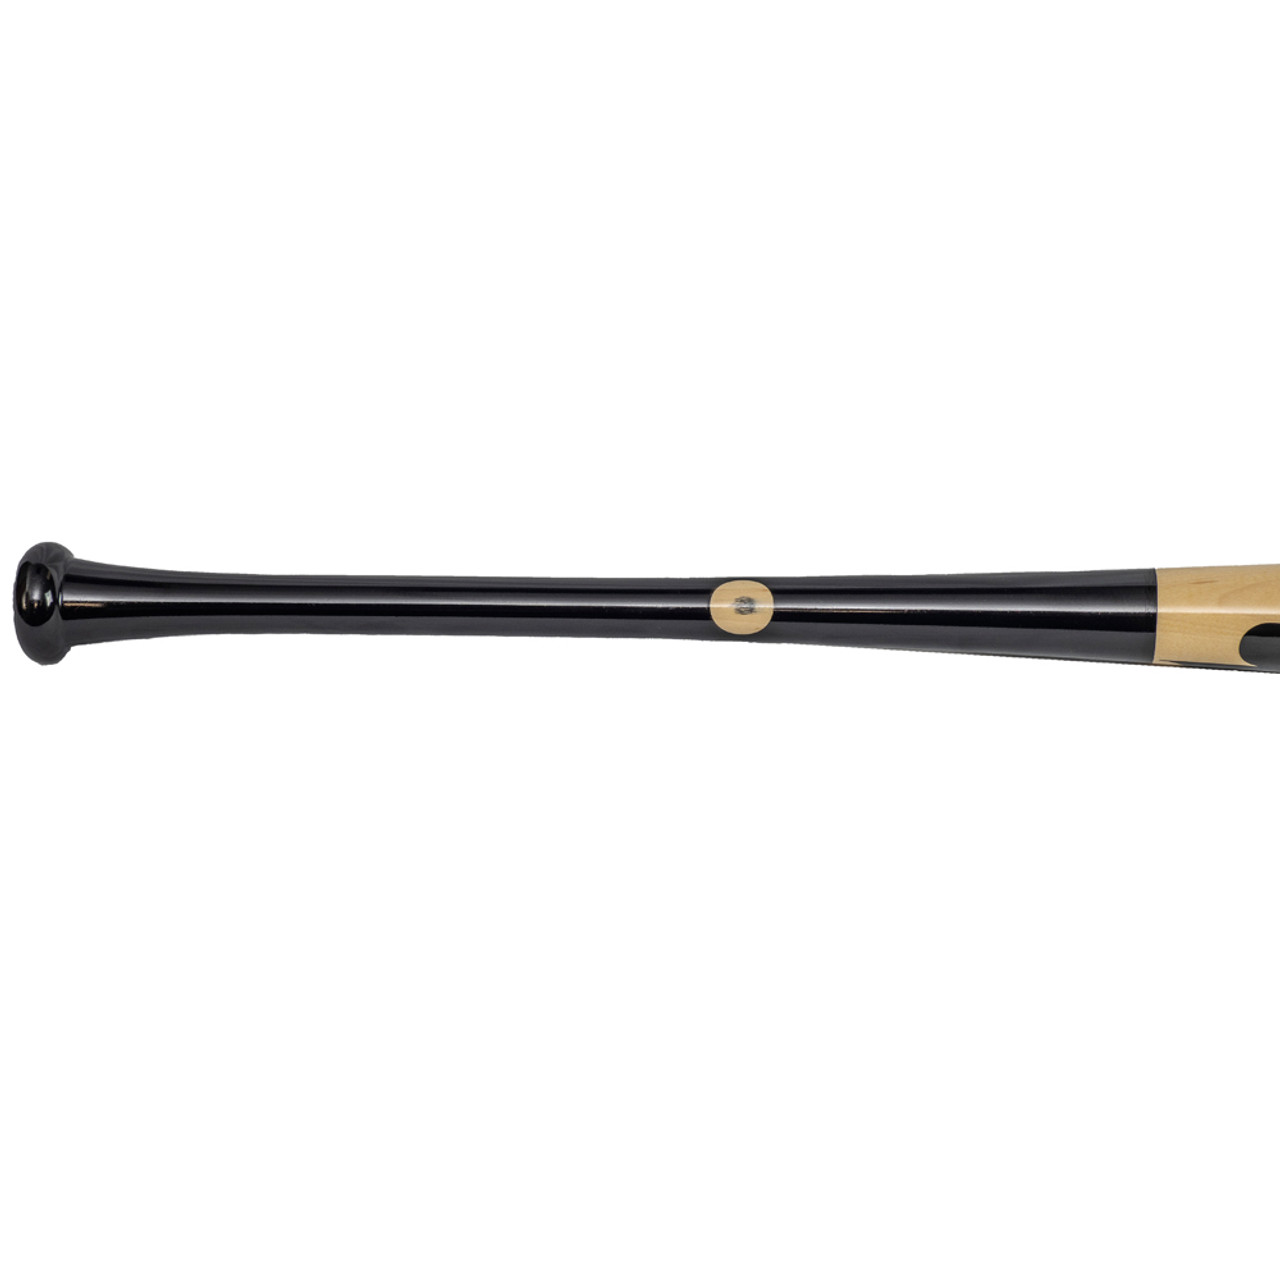 SSK Z9 Professional Edge S110 Model Maple Wood Baseball Bat